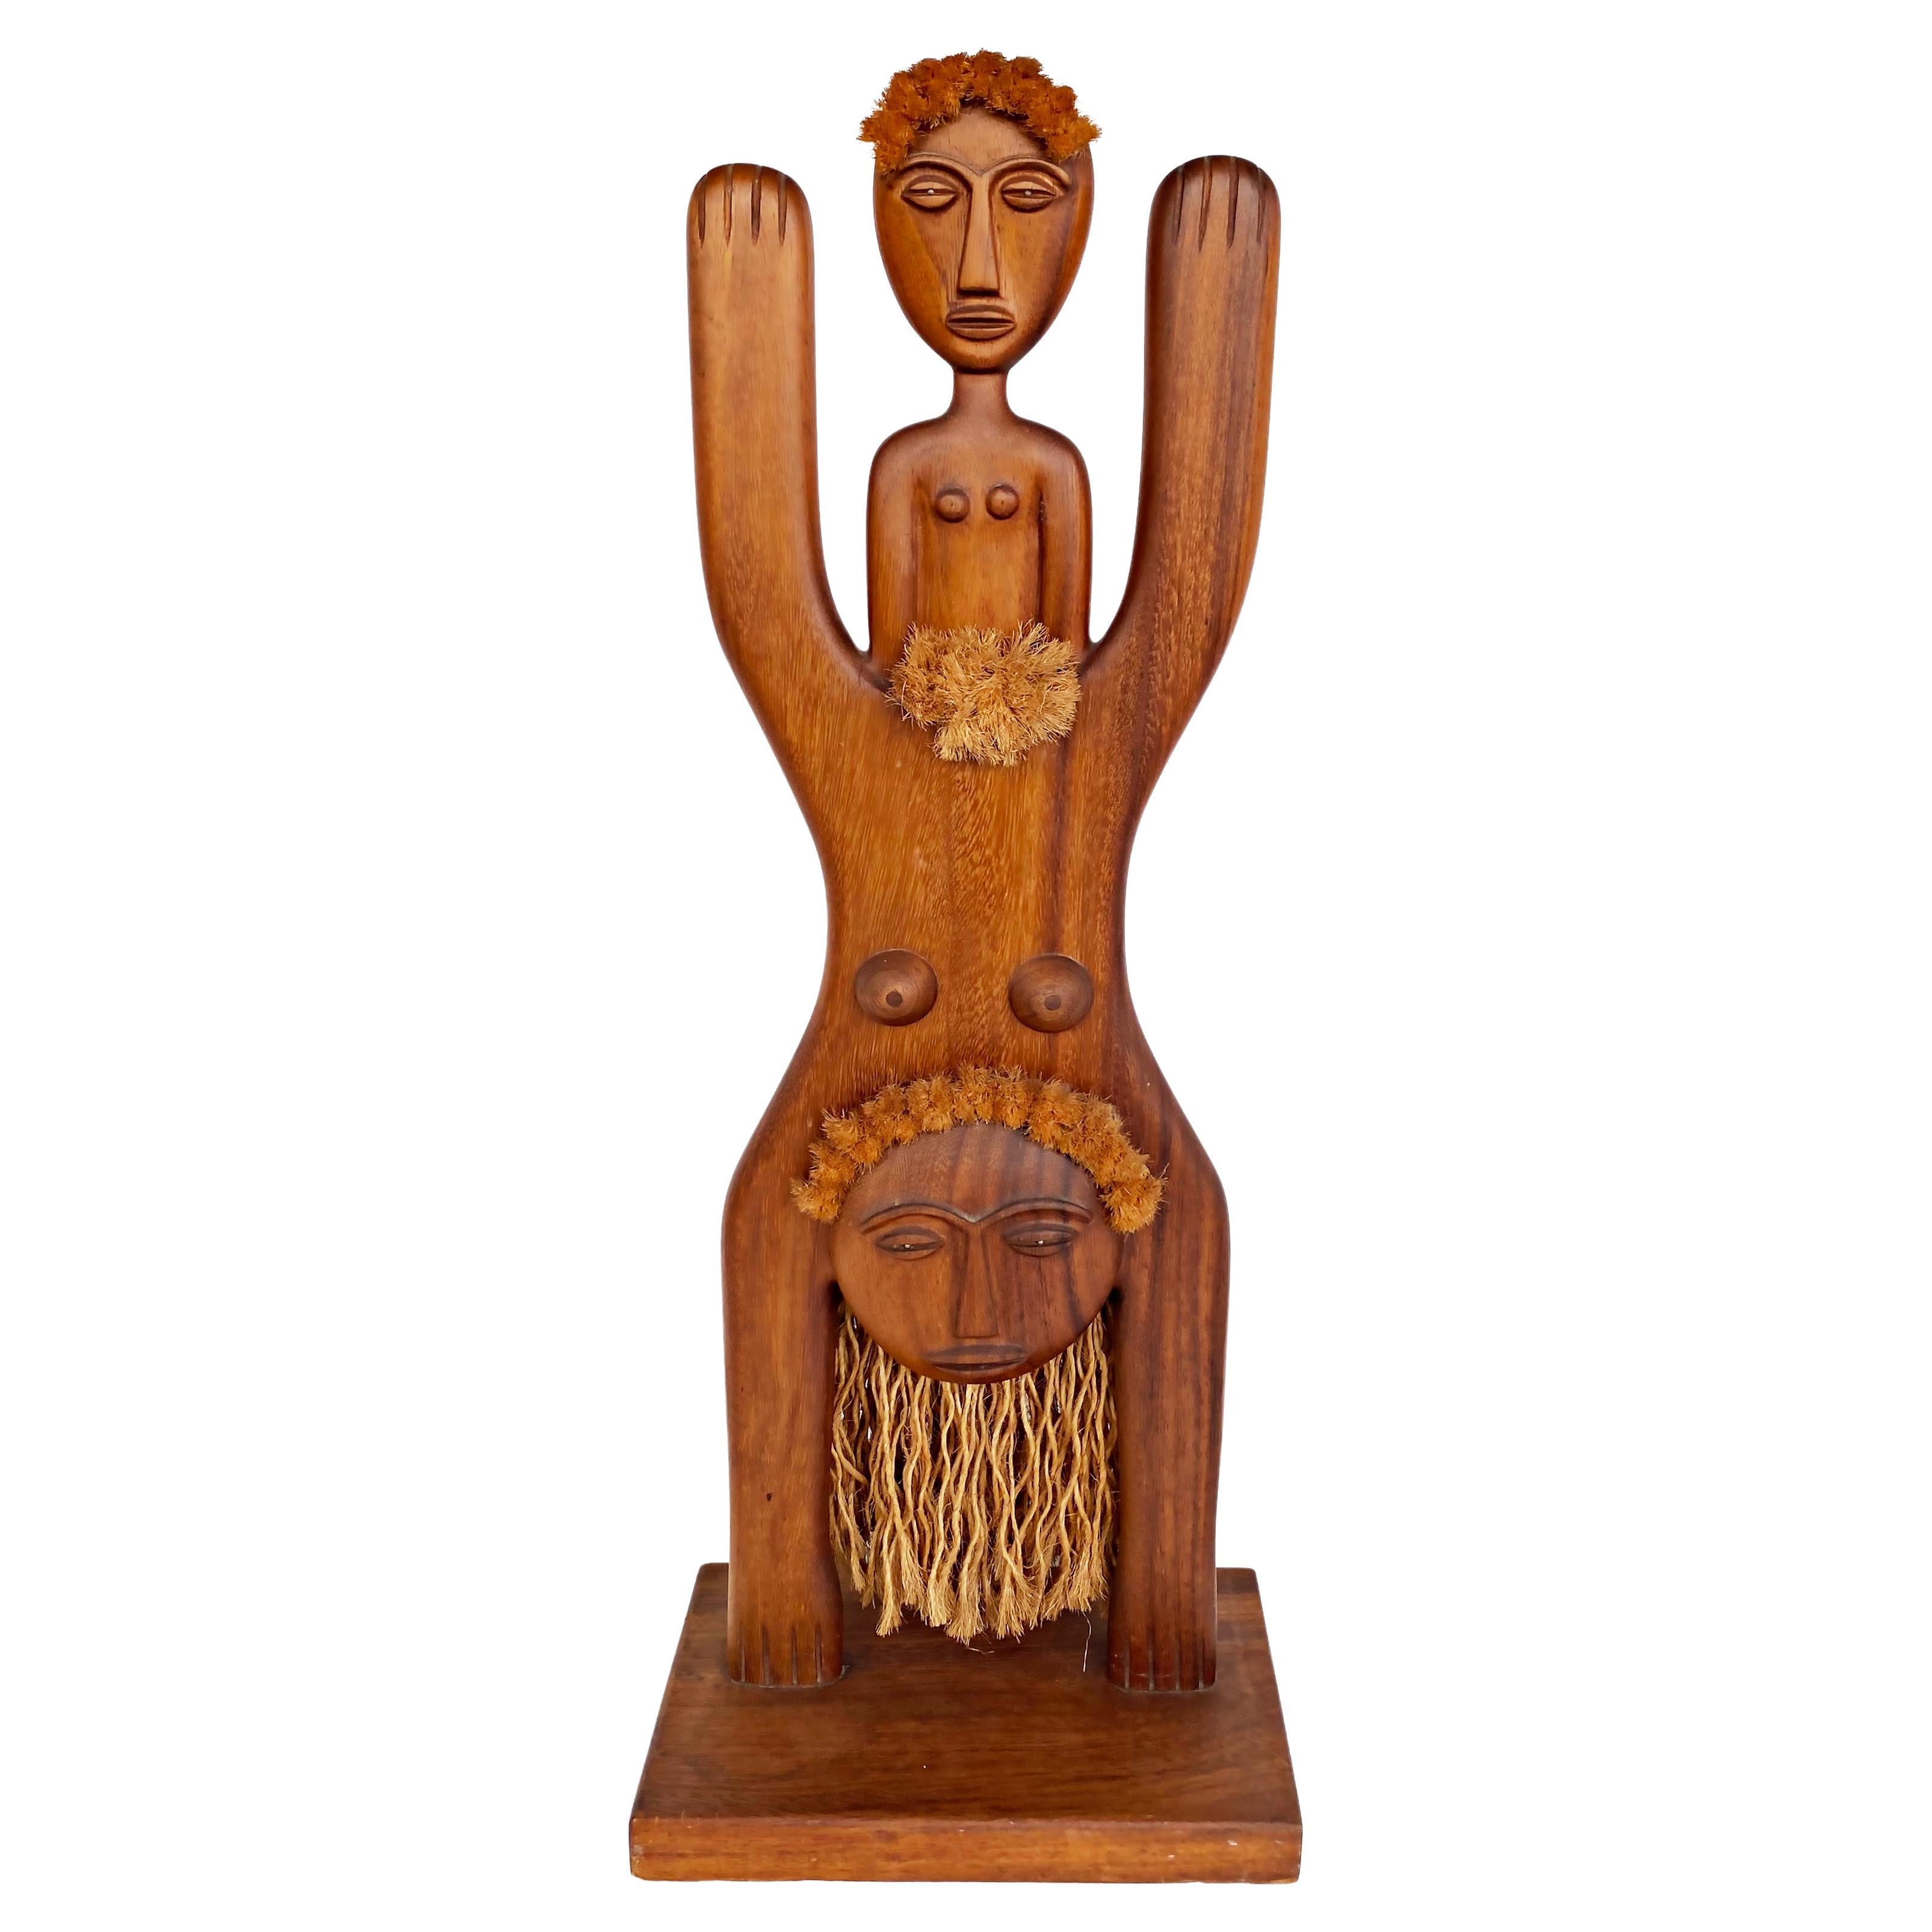  1978 Carved Wood Fertility Sculpture by Edwin Scheier, Signed